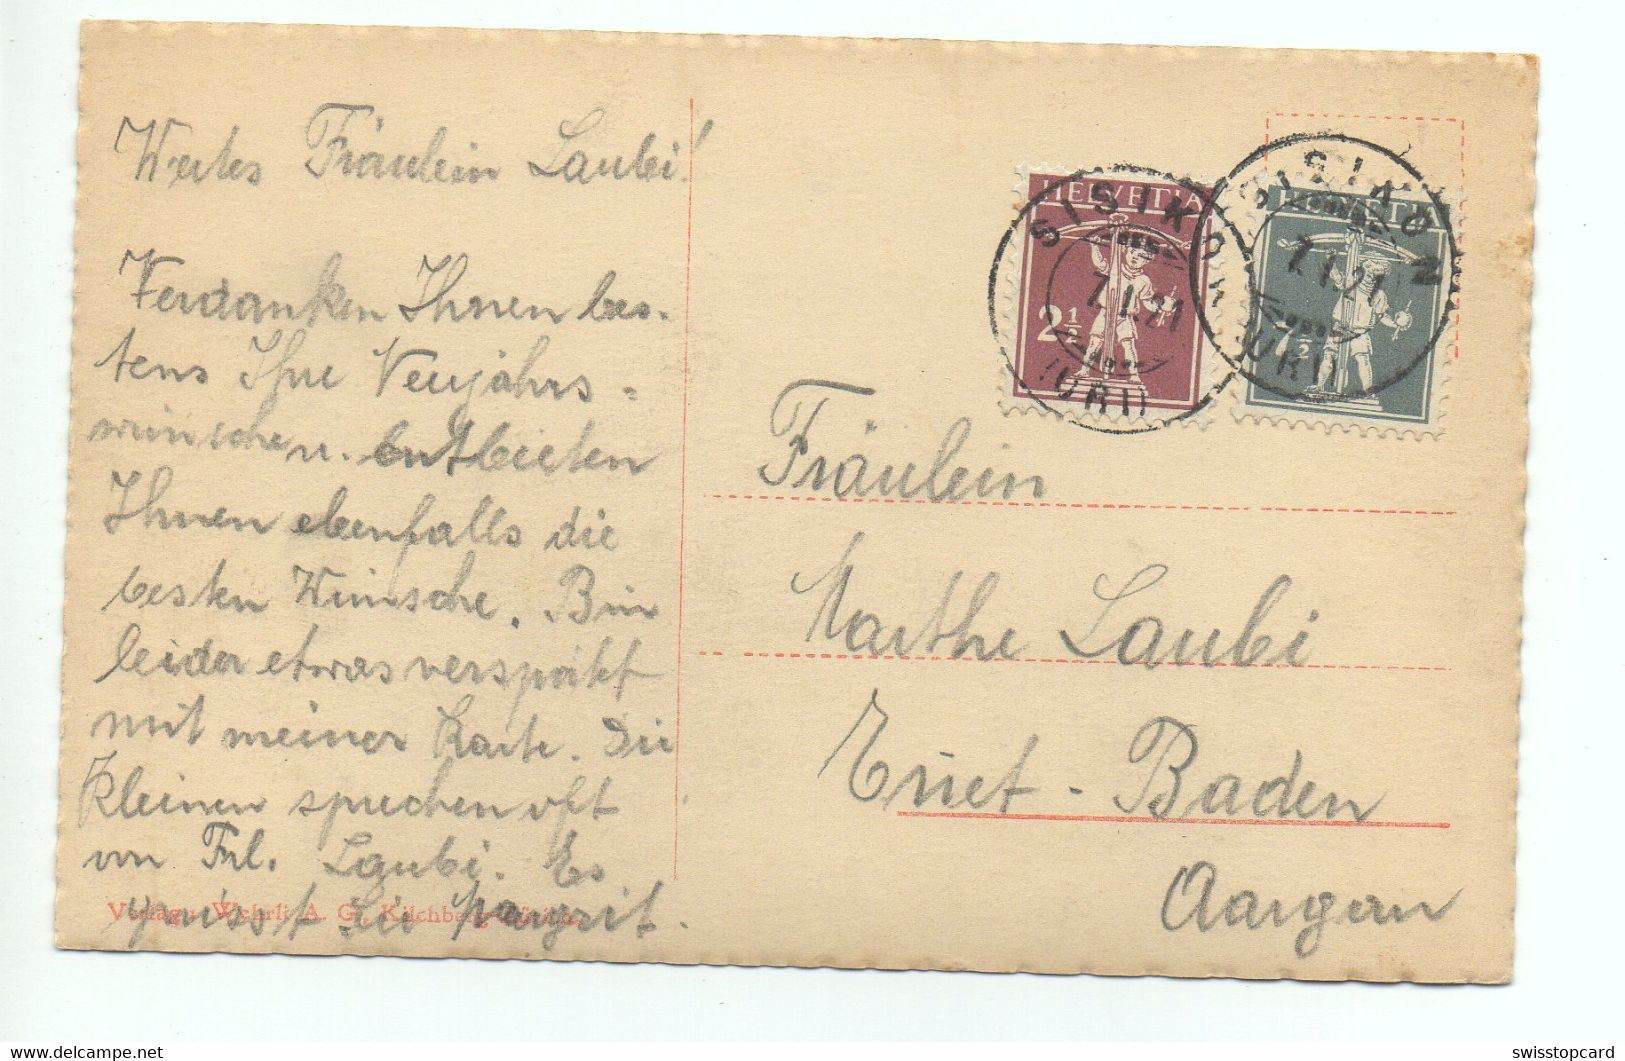 AXENSTRASSE Und Urirotstock Spaziergang Gel. 1921 V. Sisikon Mischfrankatur Tellknabe - Sisikon